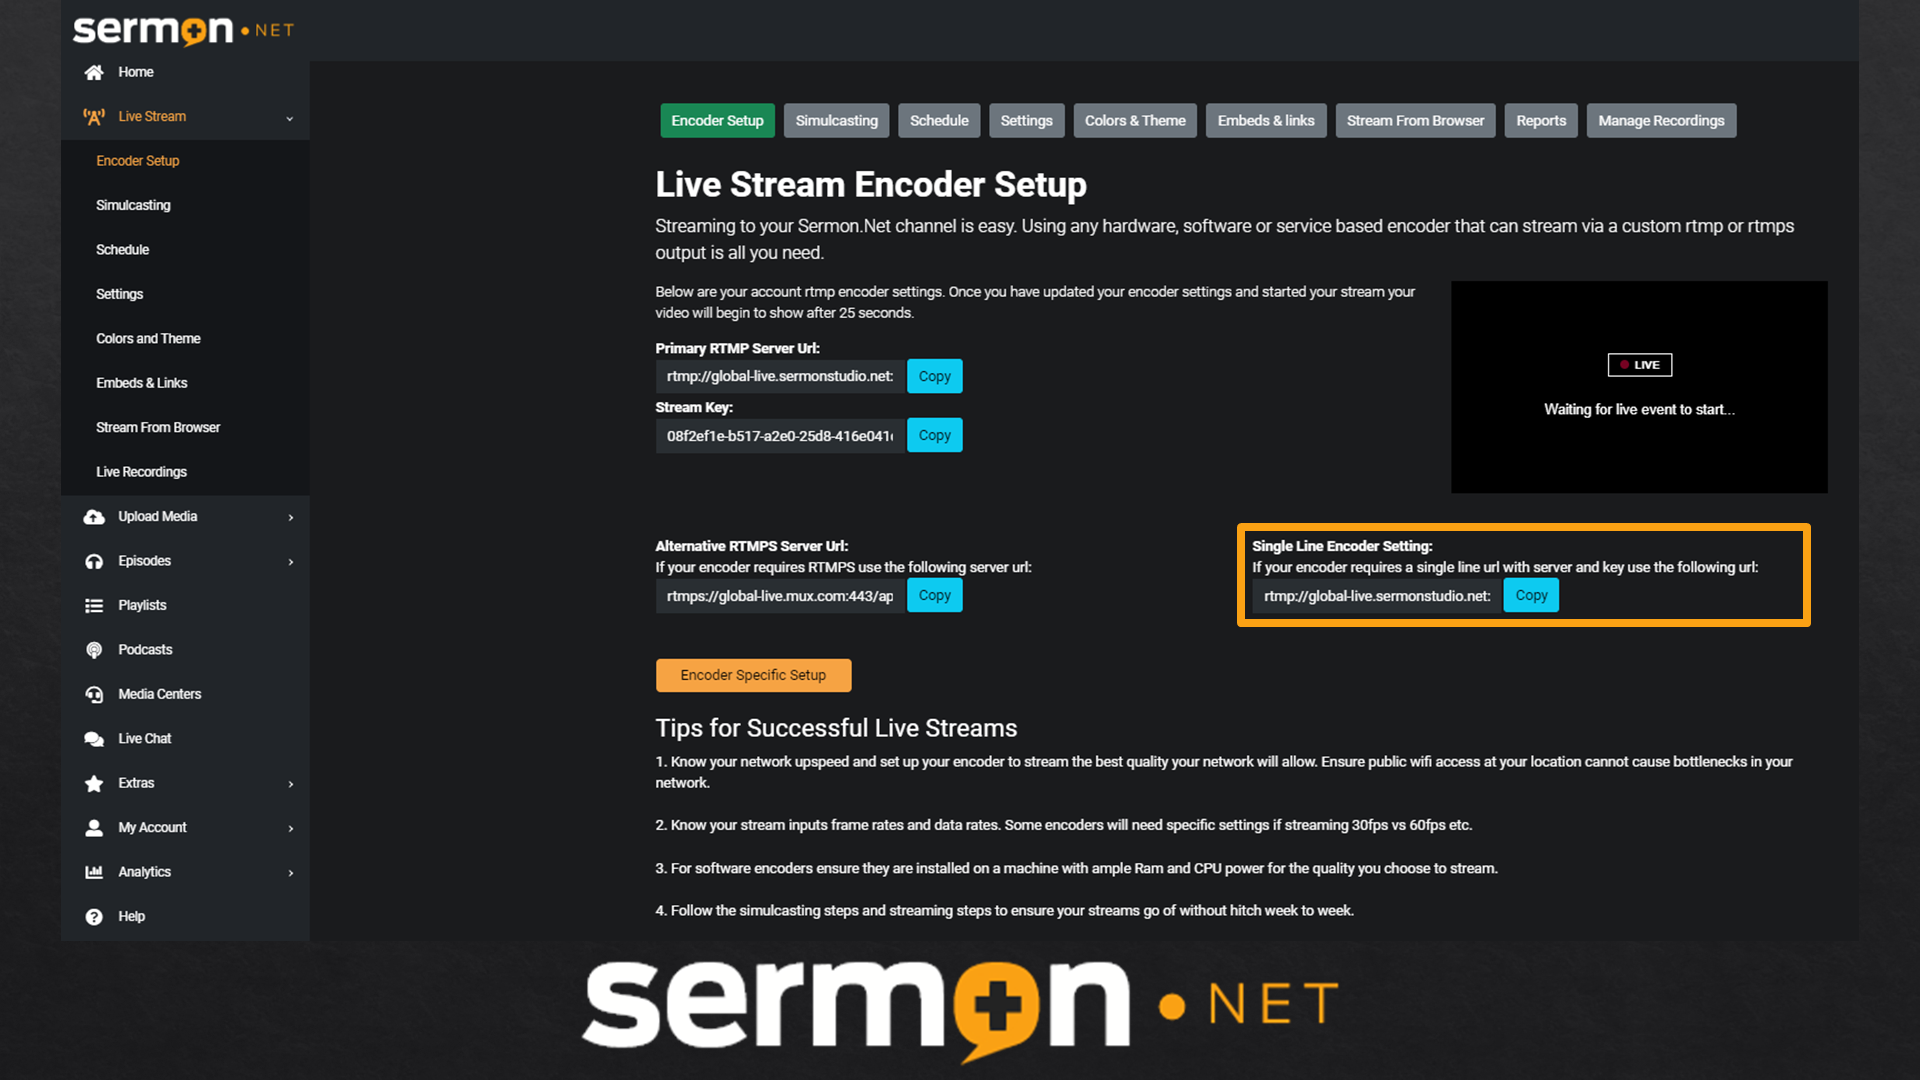 sermon.net live streaming media